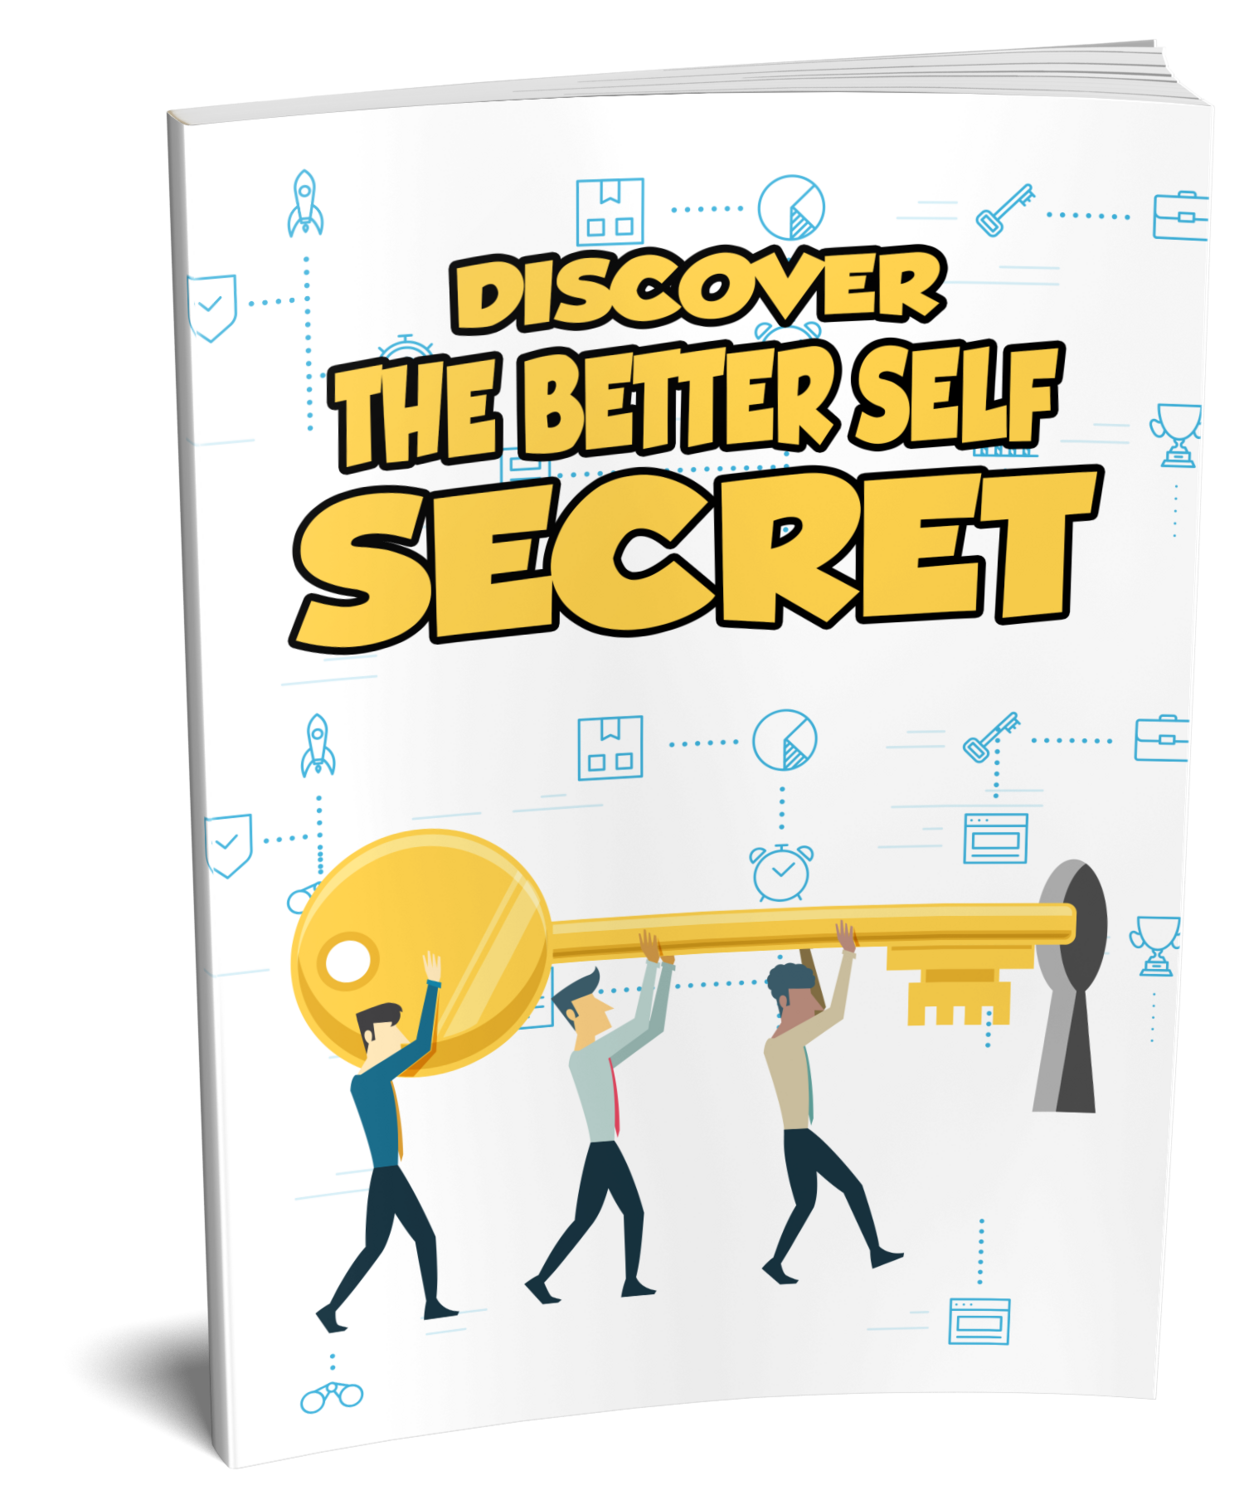 Discover the Better Self Secret